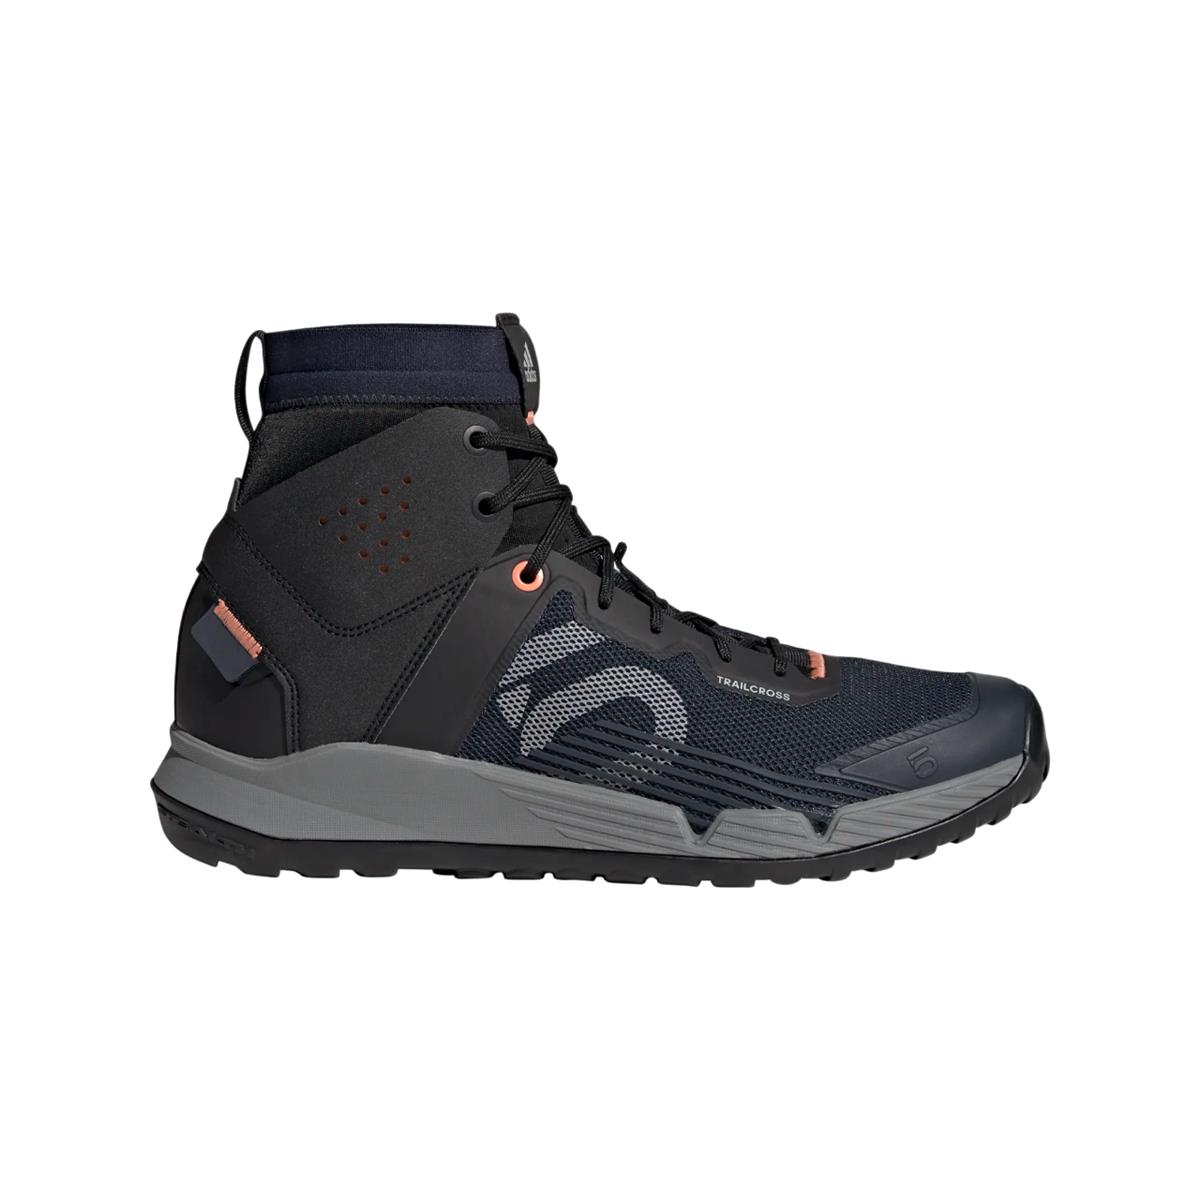 Flat 5.10 Trailcross Mid Pro MTB Shoes Black/Grey Size 40